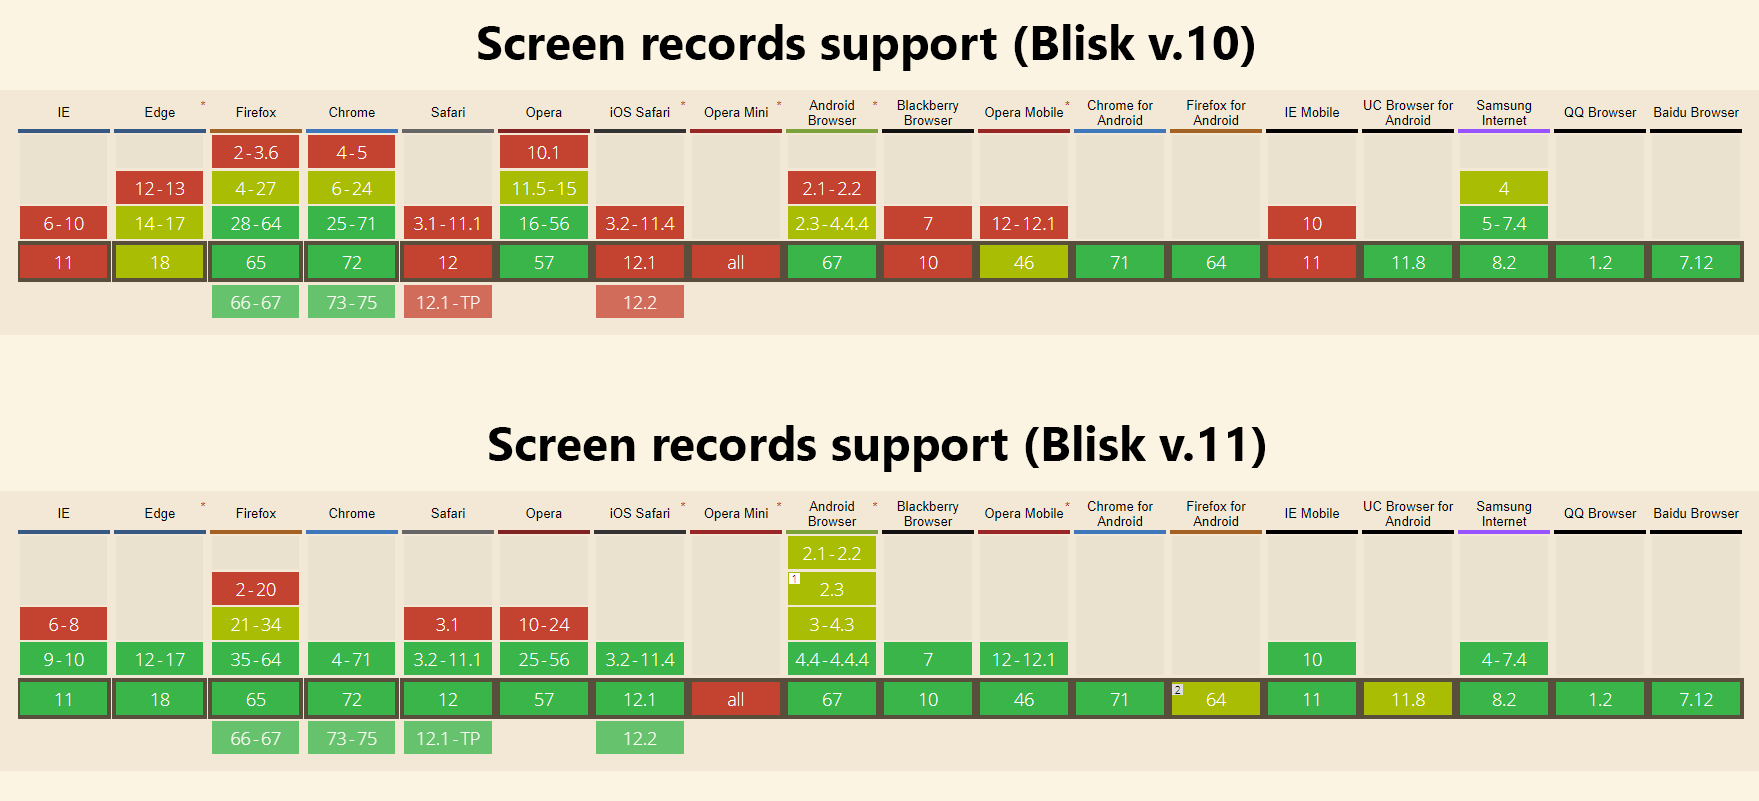 New screen records support in Blisk v.11